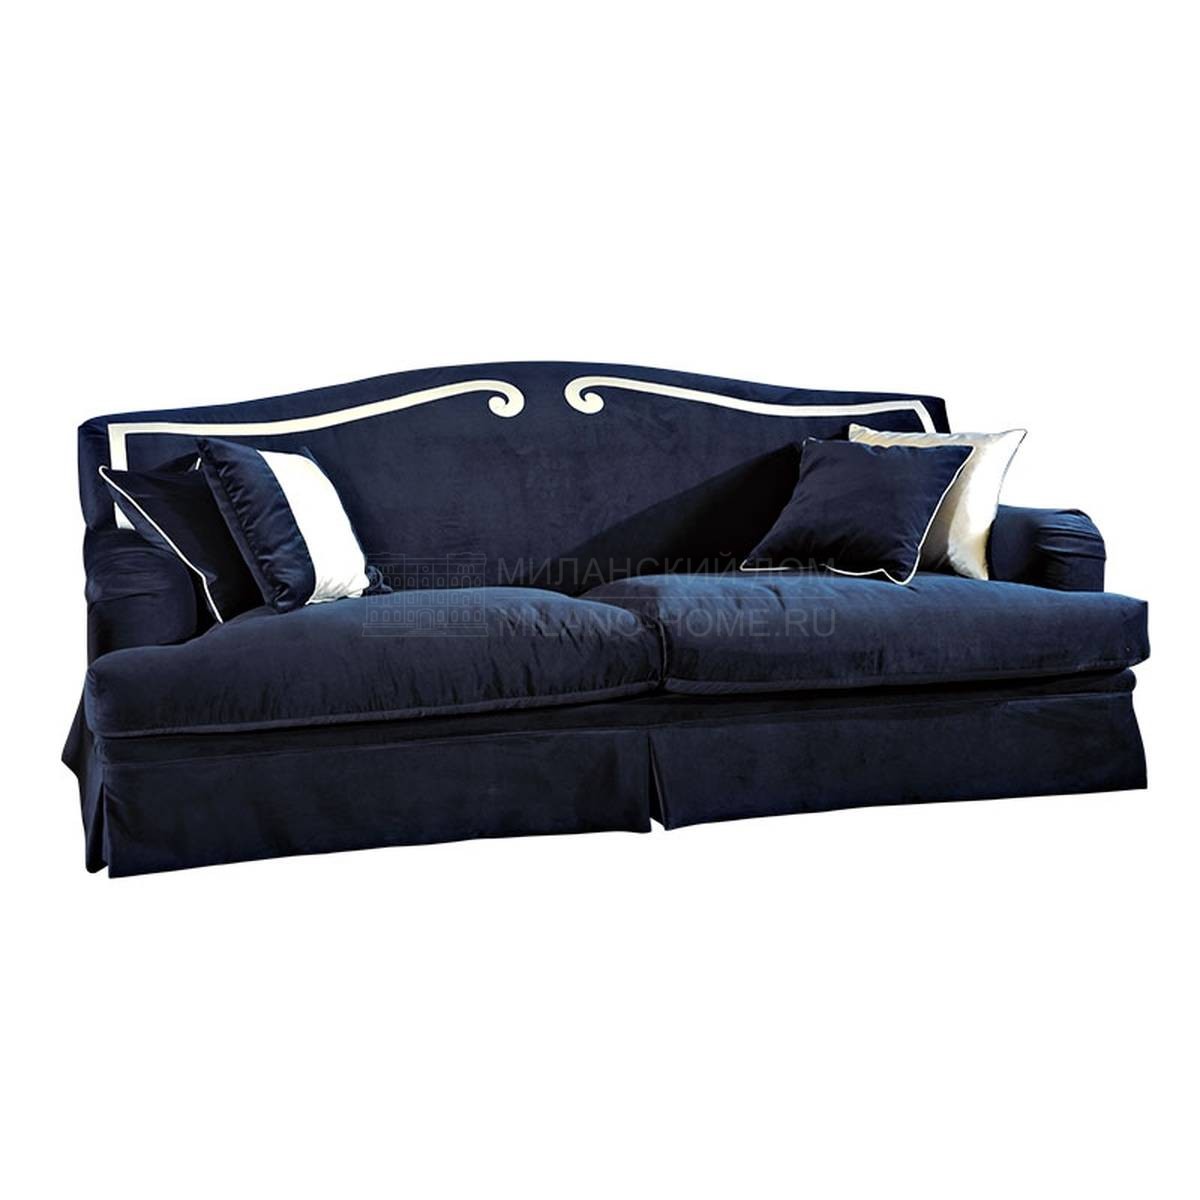 Прямой диван Clementina/ sofa из Италии фабрики SOFTHOUSE